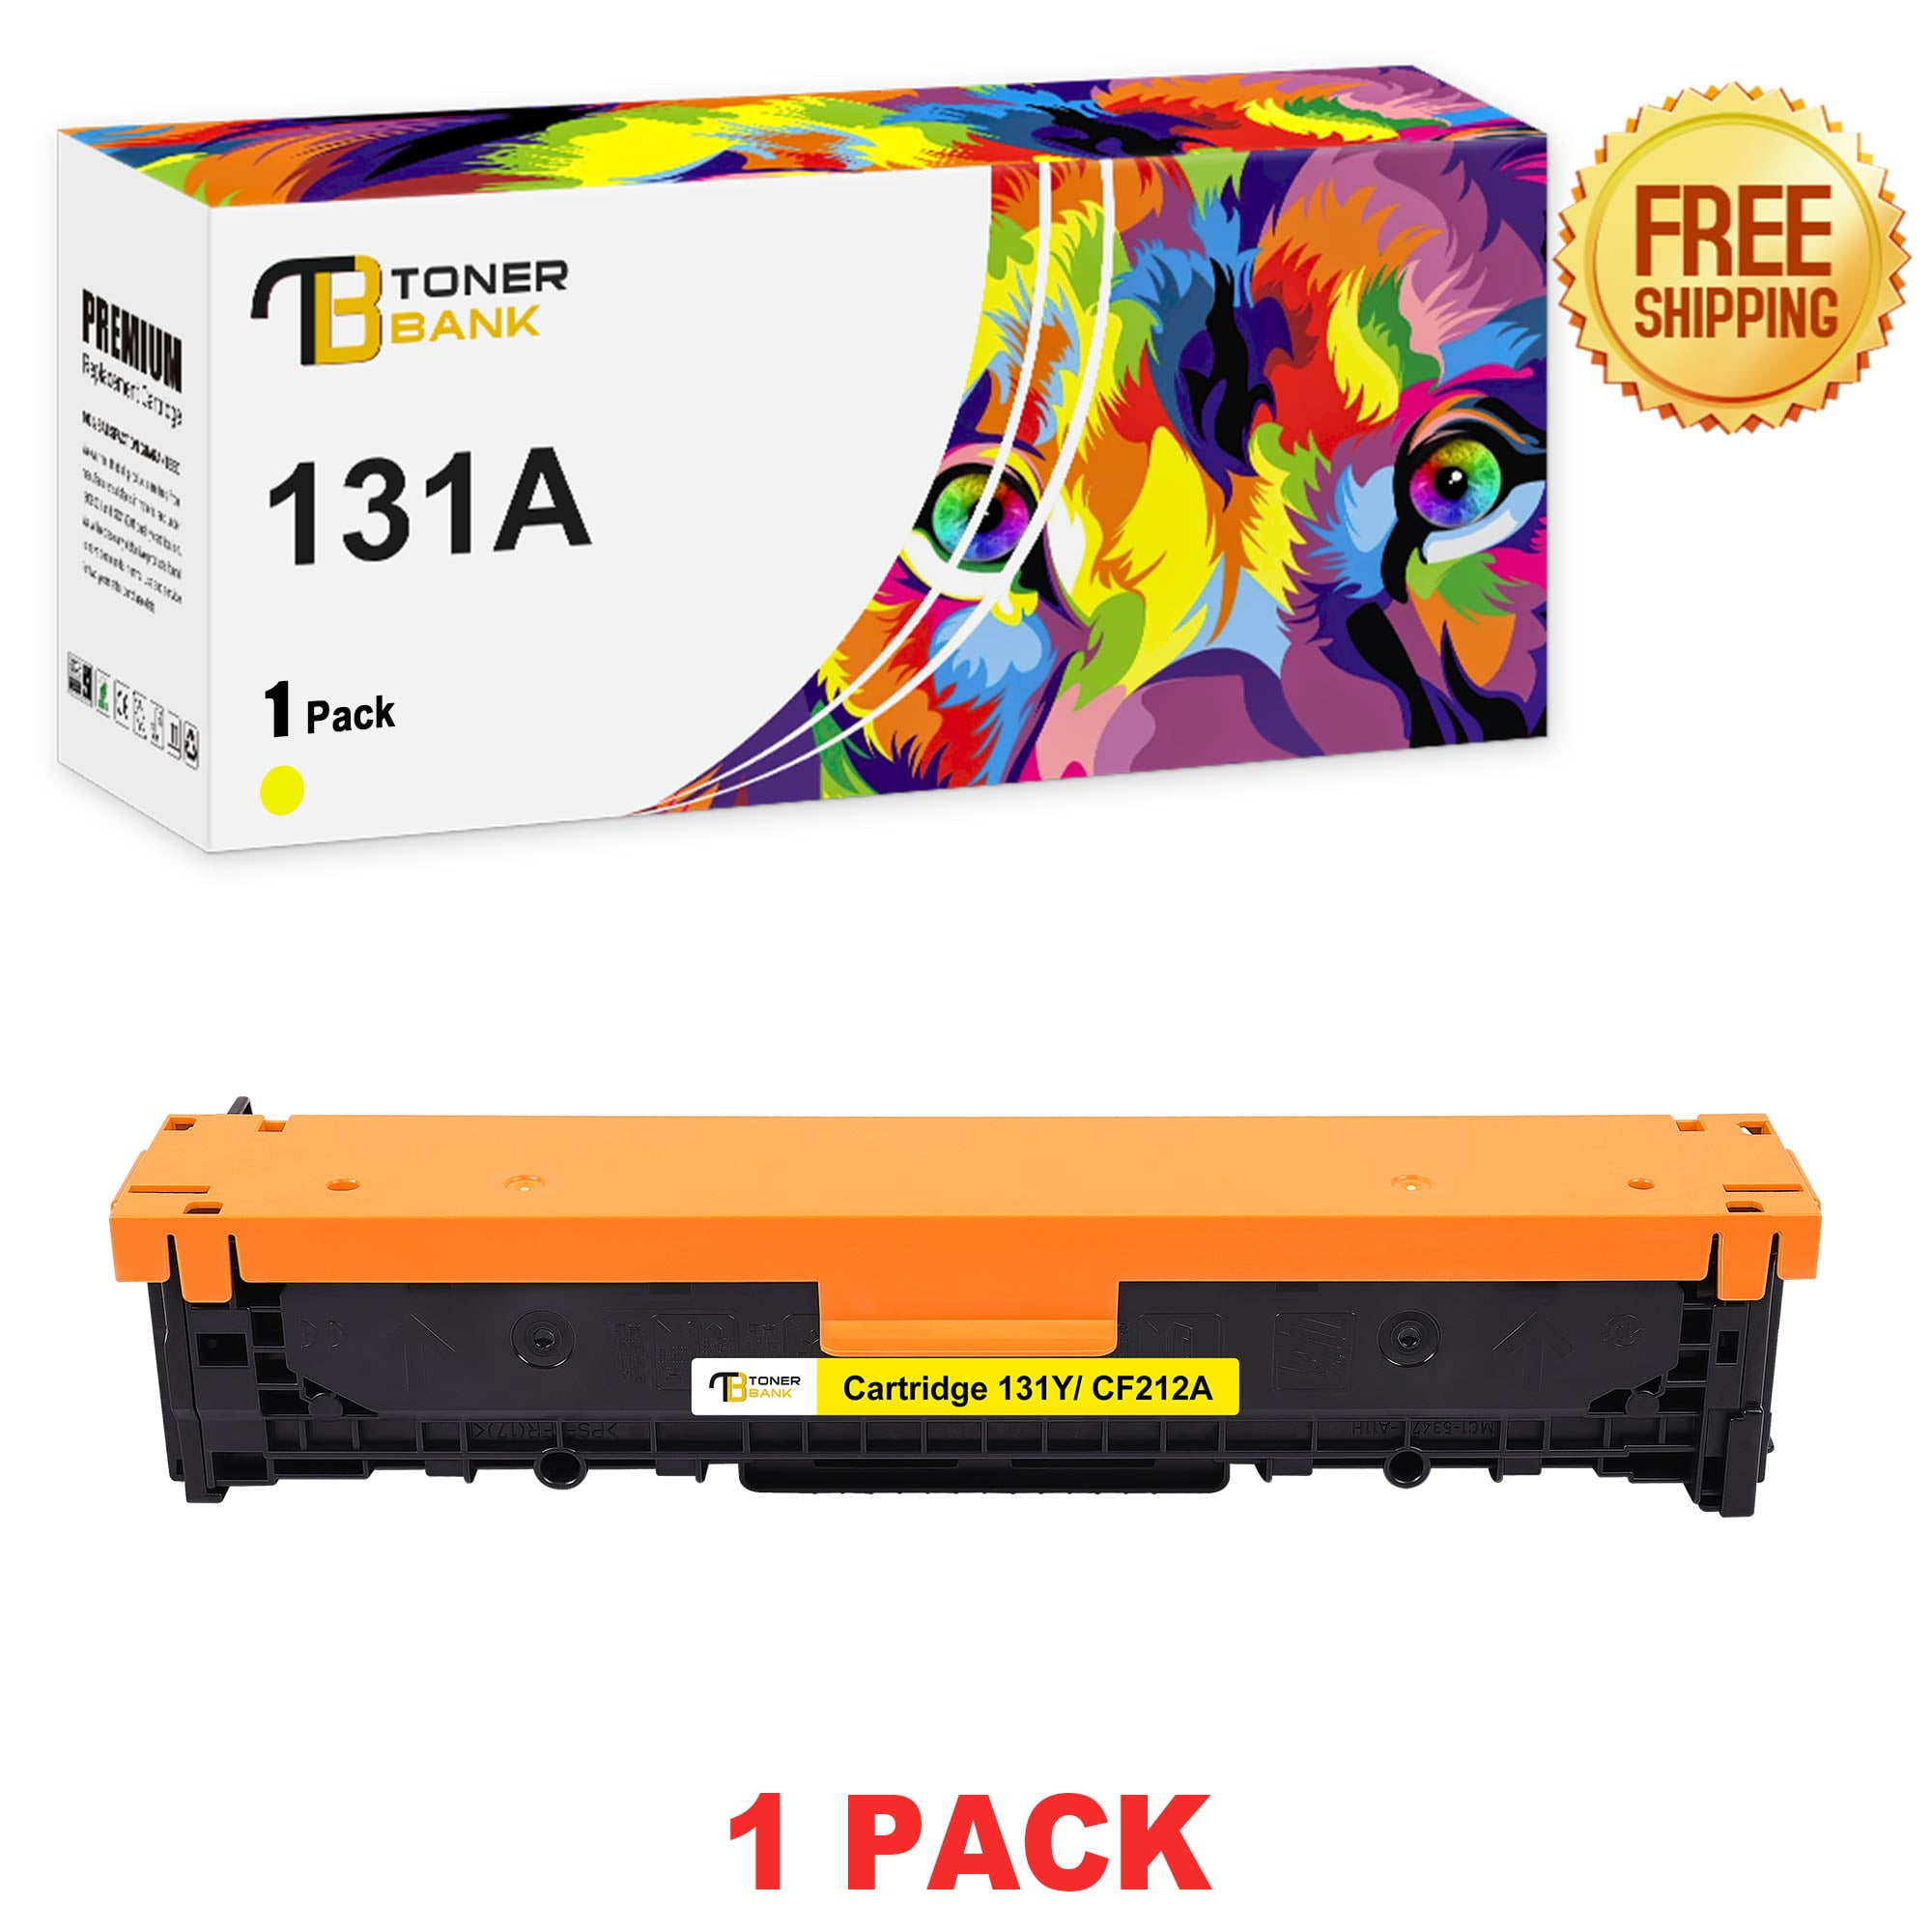 Toner Bank 1-Pack Compatible Toner for HP 131A CF210A Pro 200